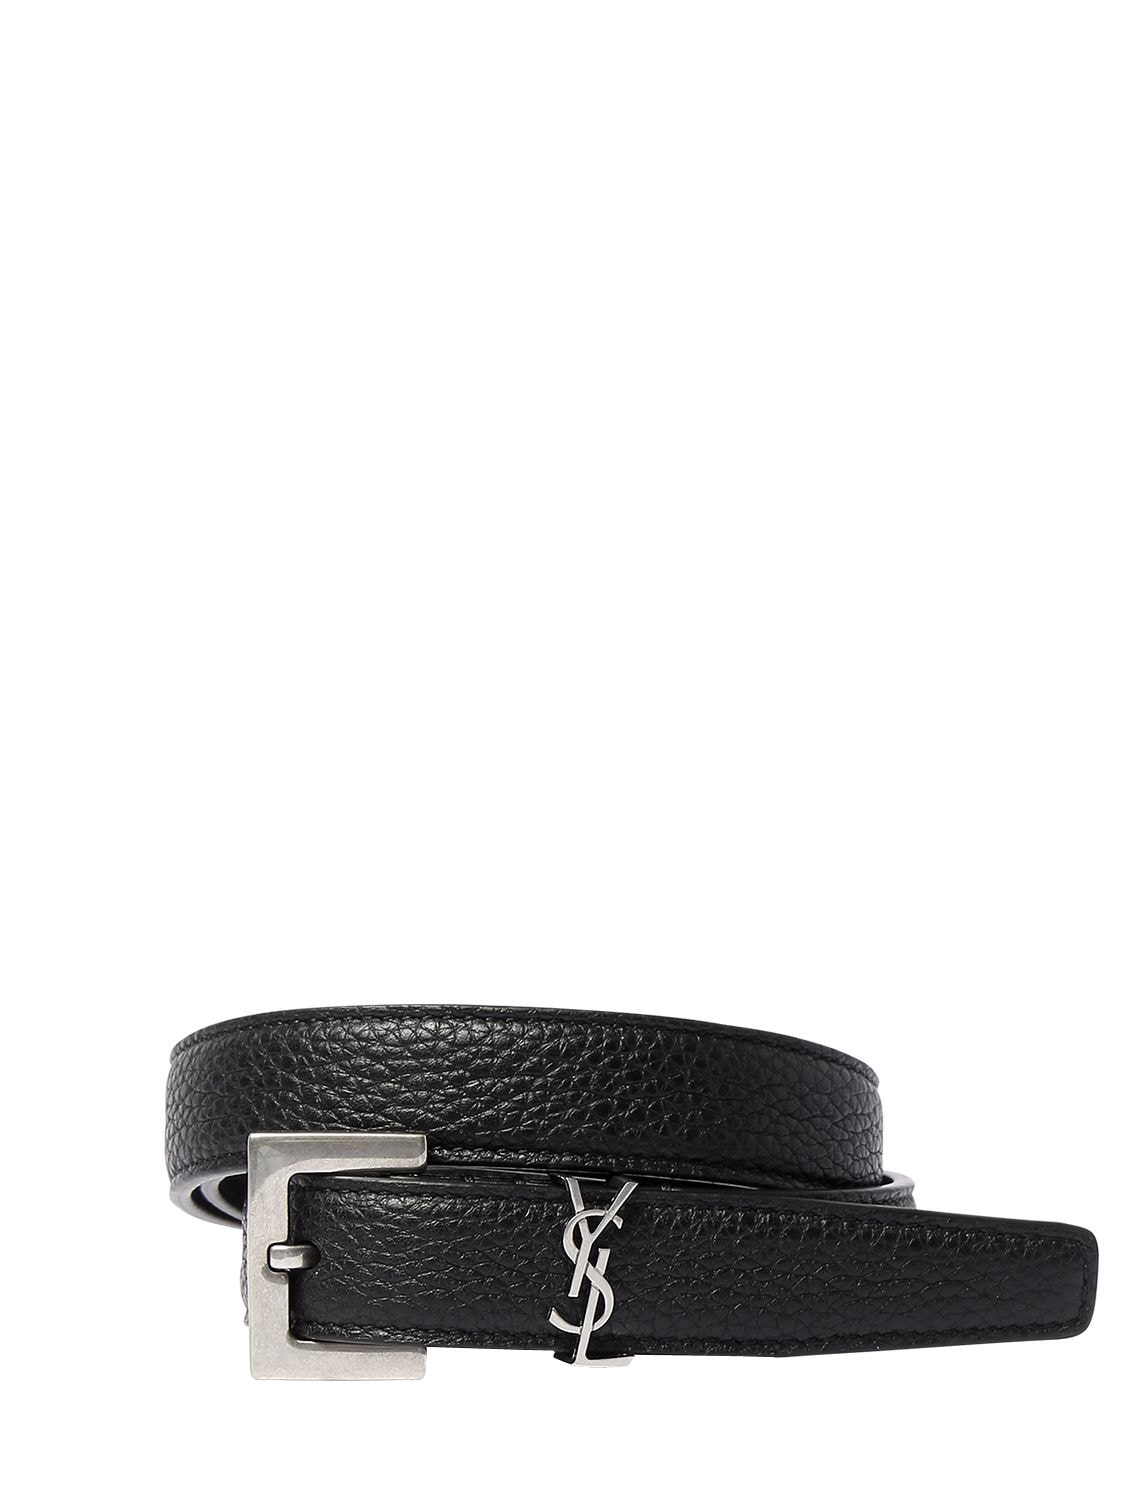 2cm Ysl Textured Leather Belt